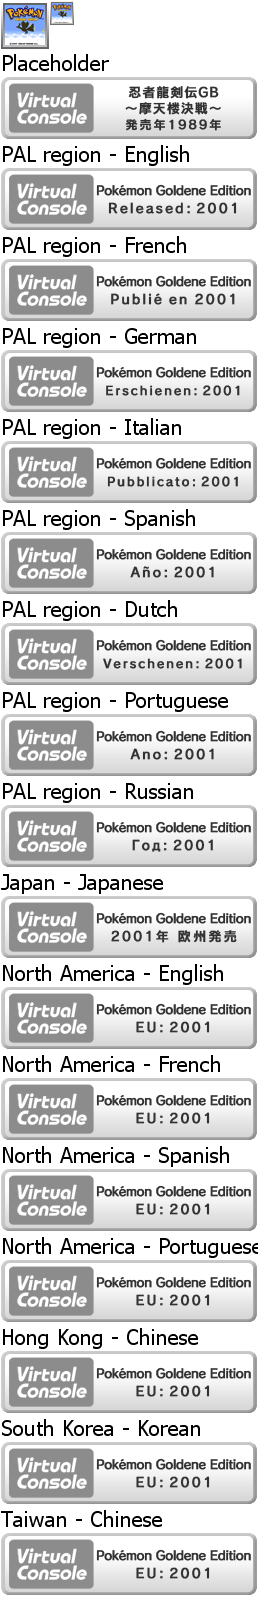 Virtual Console - Pokémon Goldene Edition